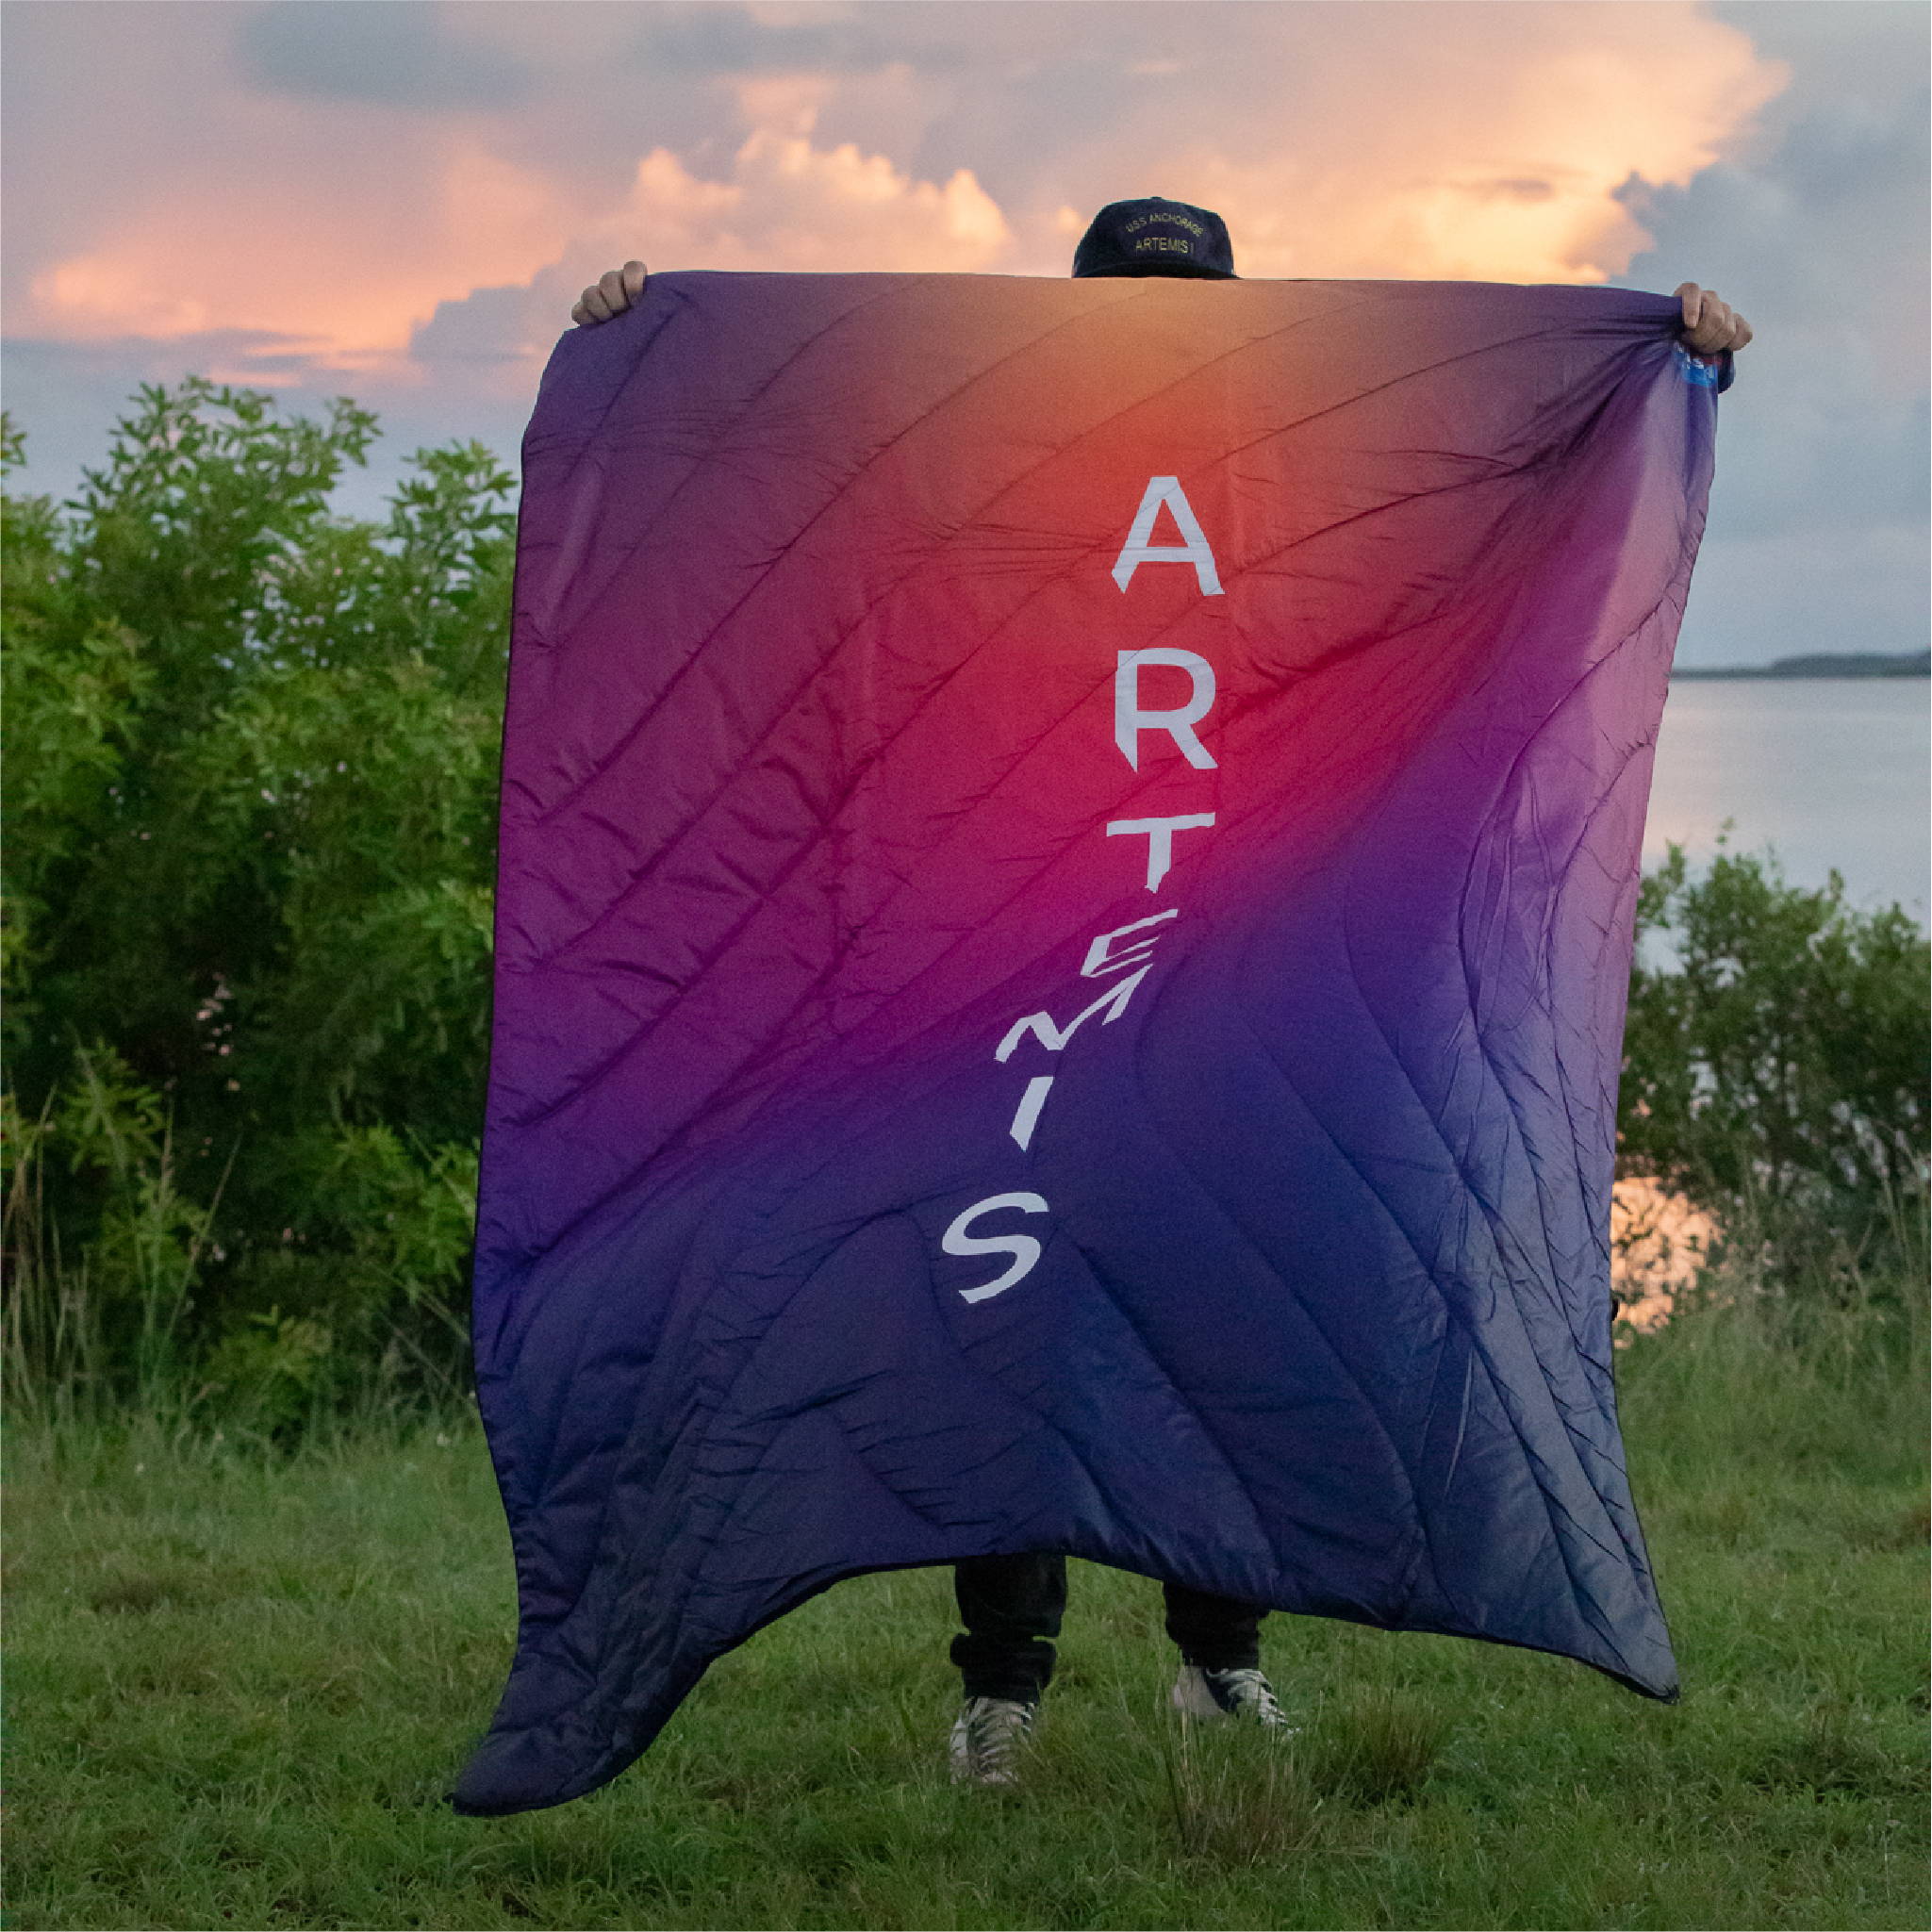 Man holding a NASA Artemis Rumpl purple blanket